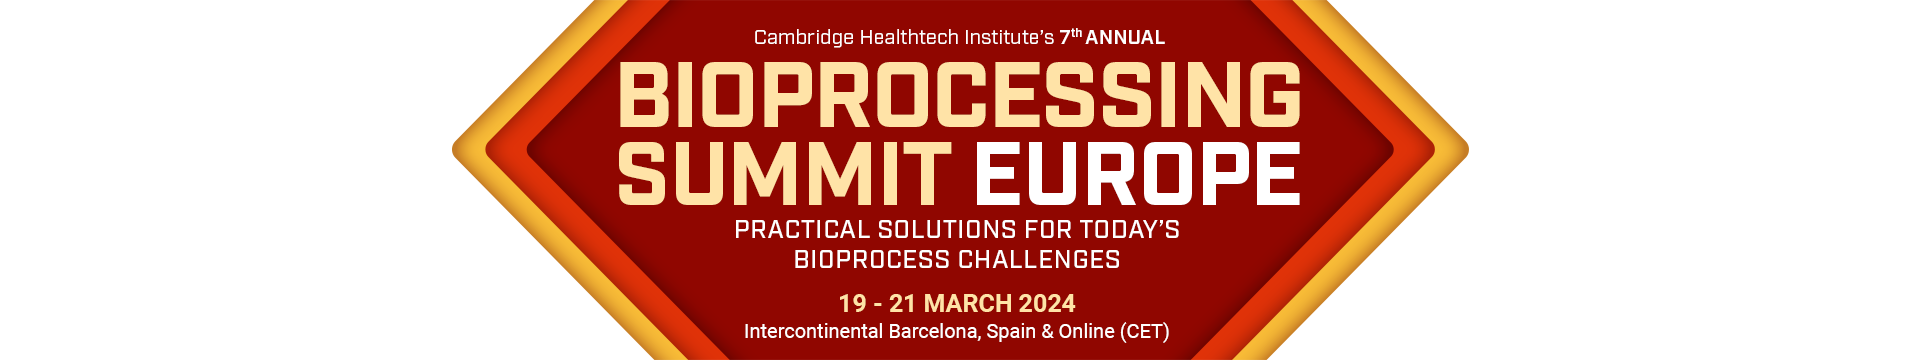 Bioprocessing Summit Europe 2024